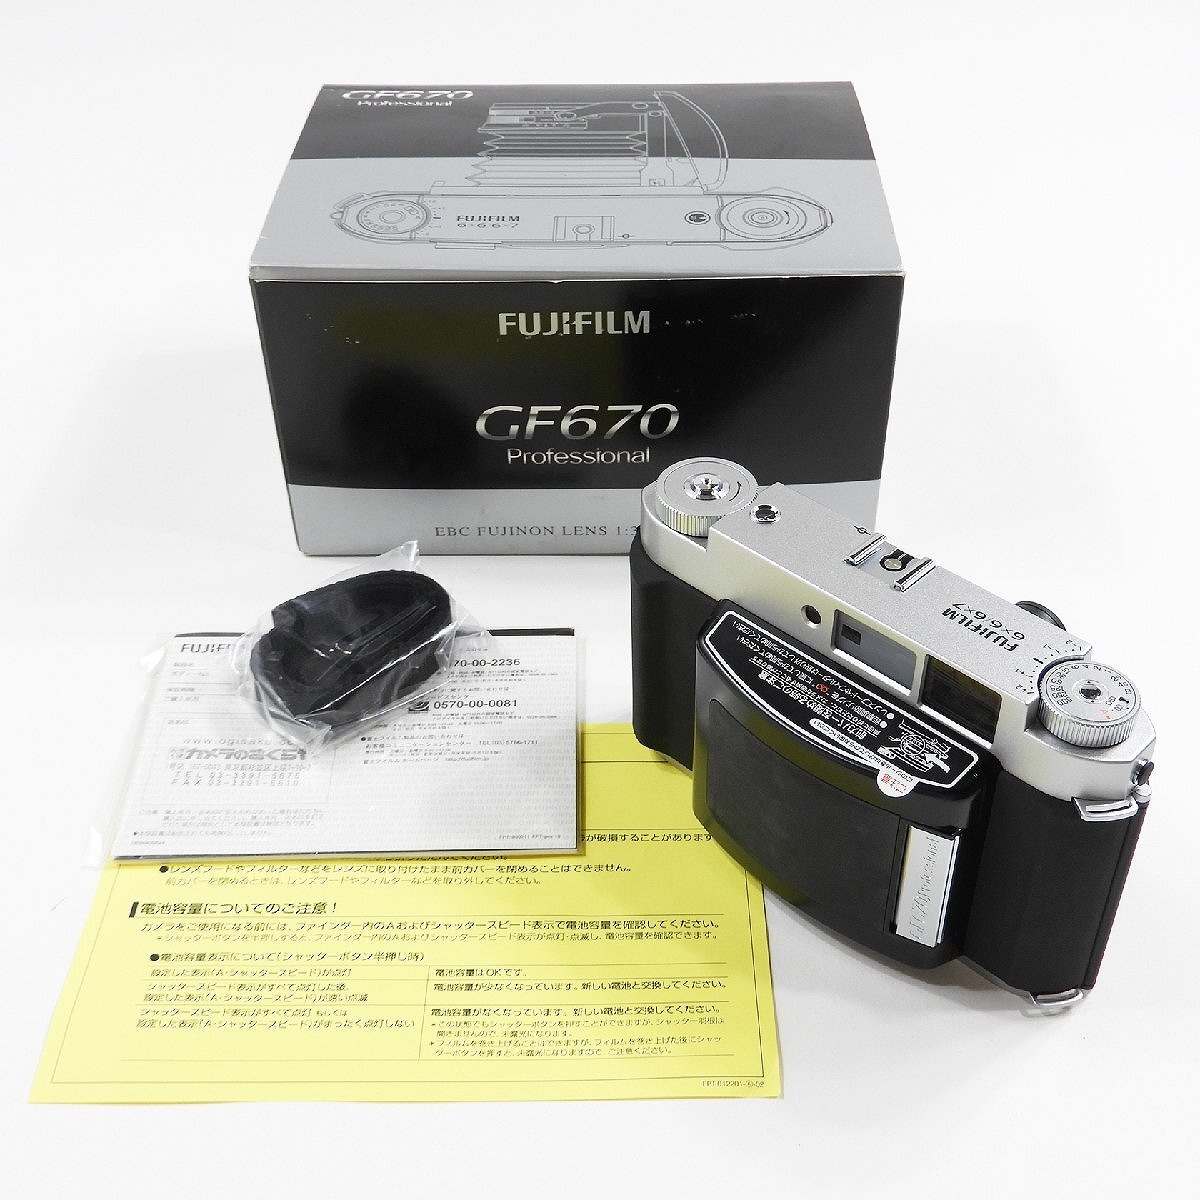 FUJIFILM フジフイルム GF670 Professional 6×6/6×7 中判カメラ